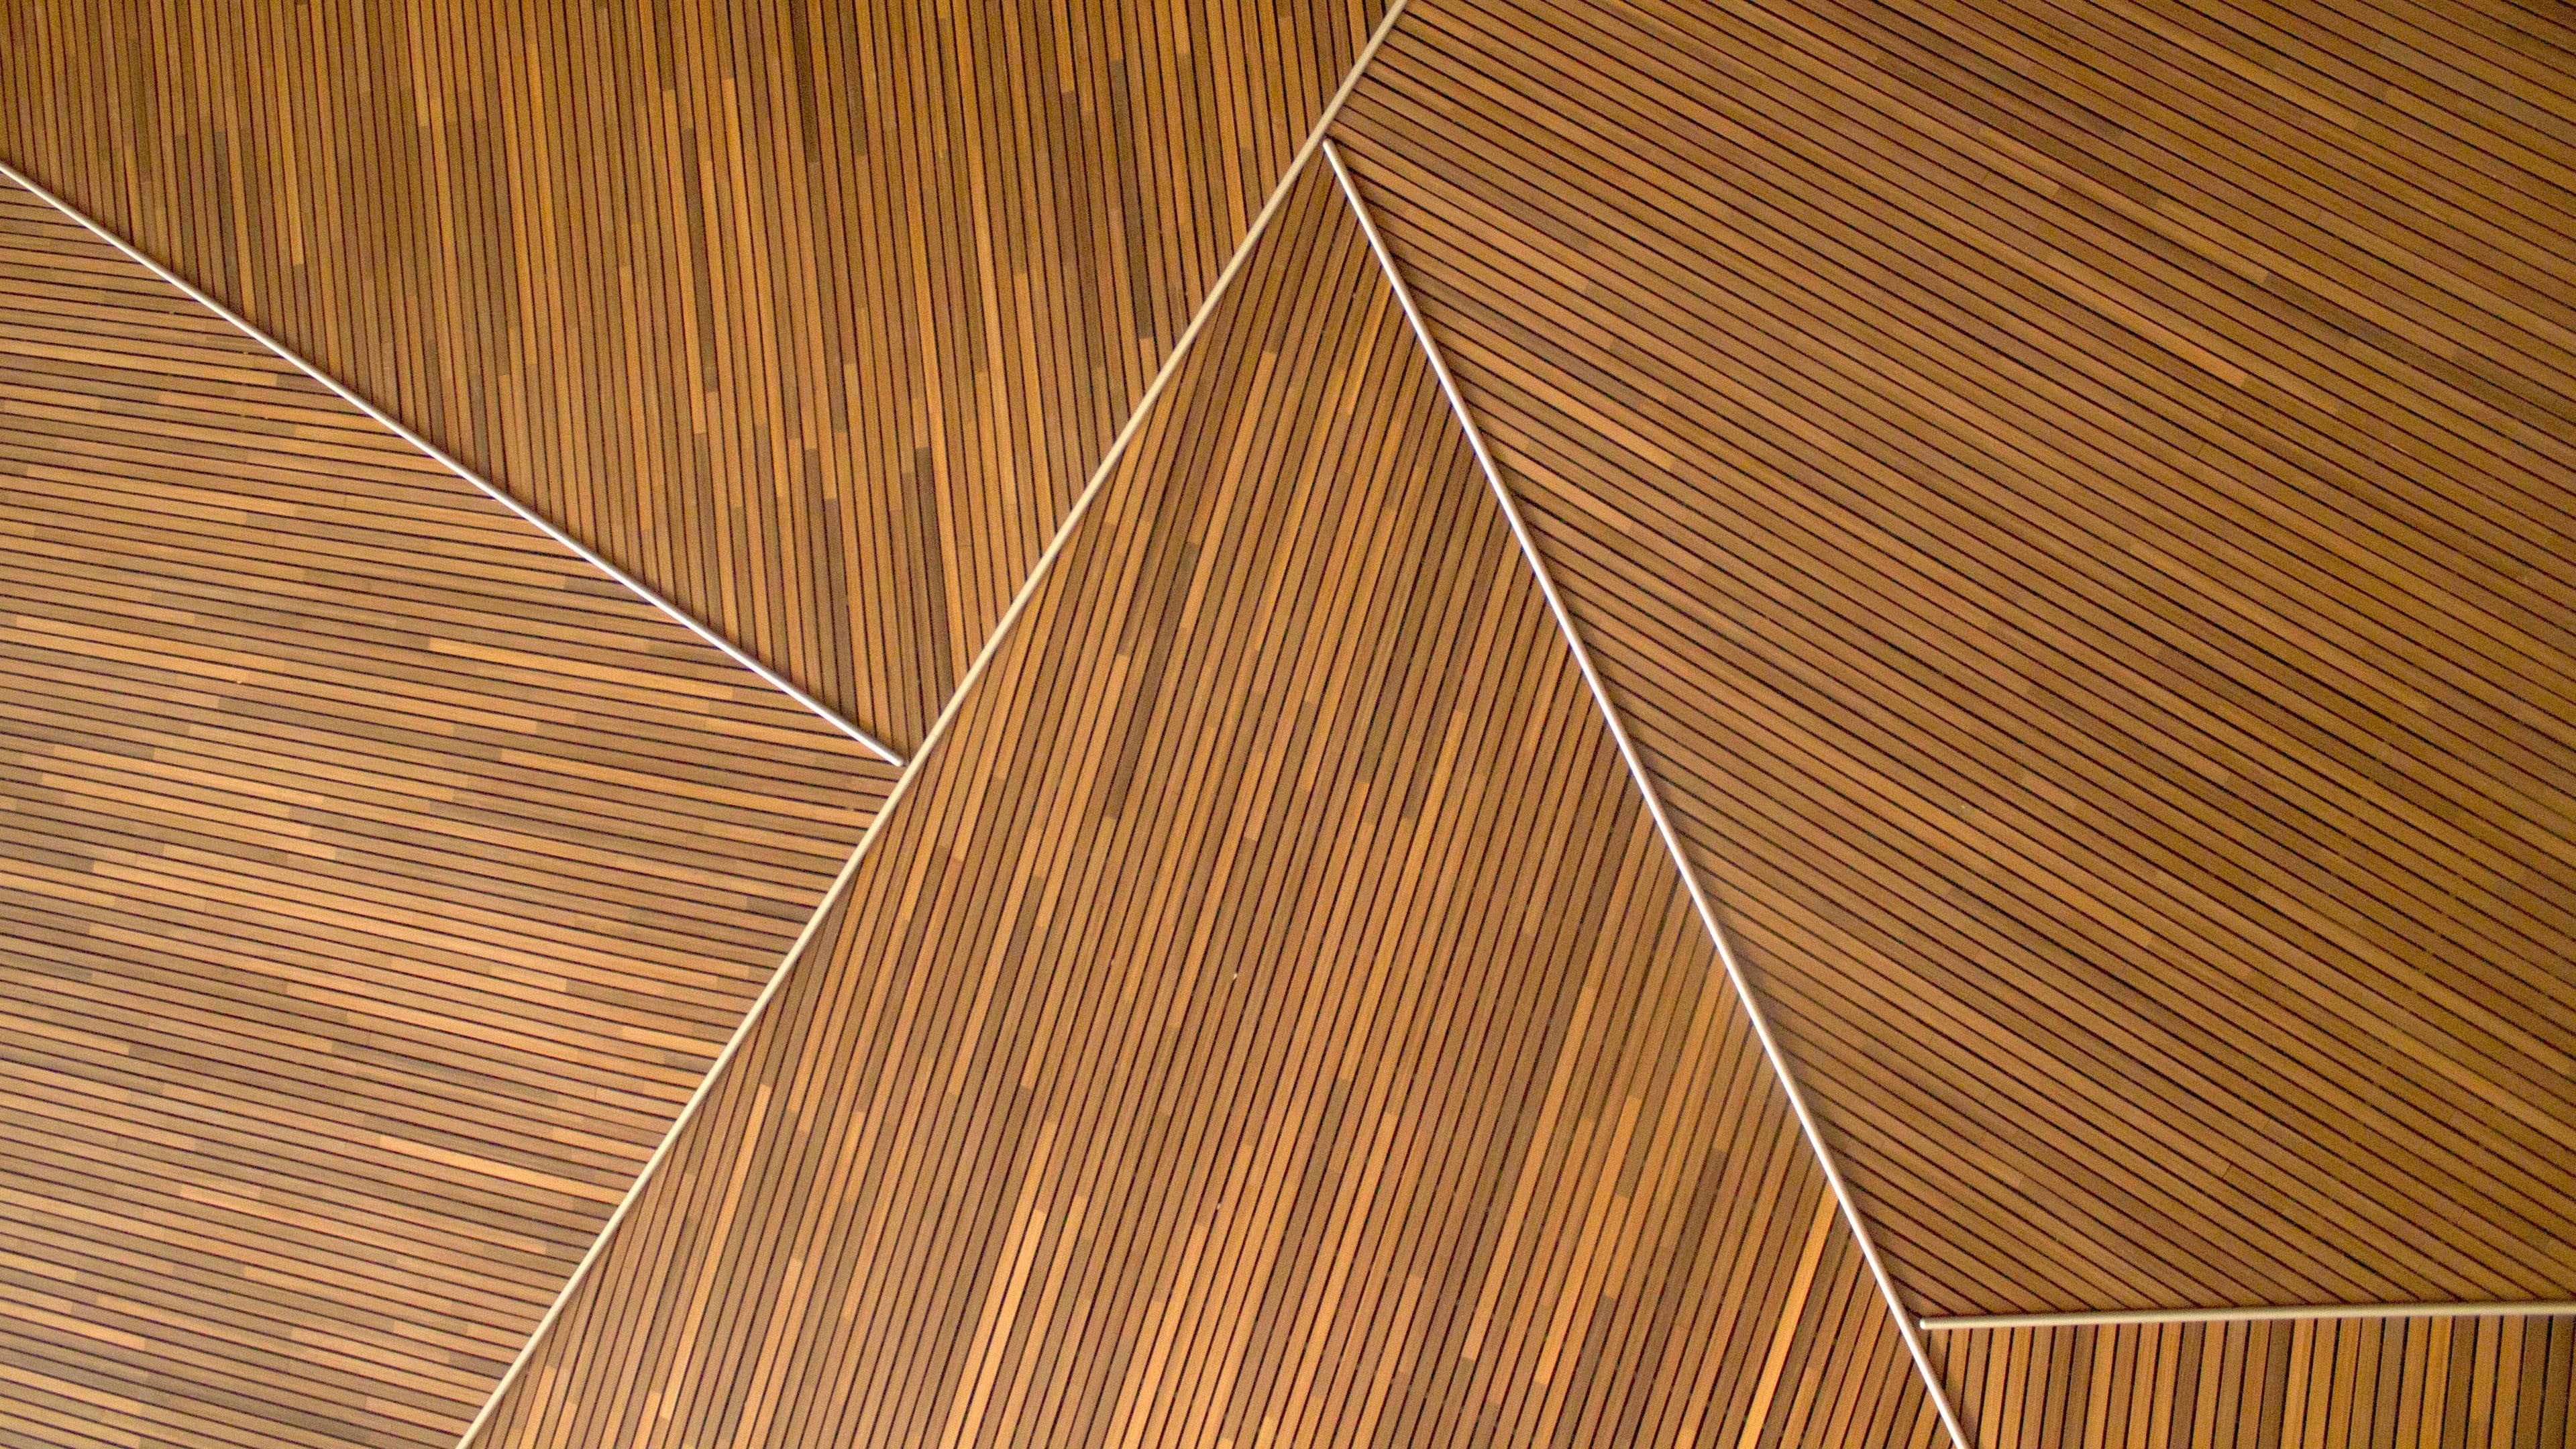 Texture Wood Images Hd - HD Wallpaper 